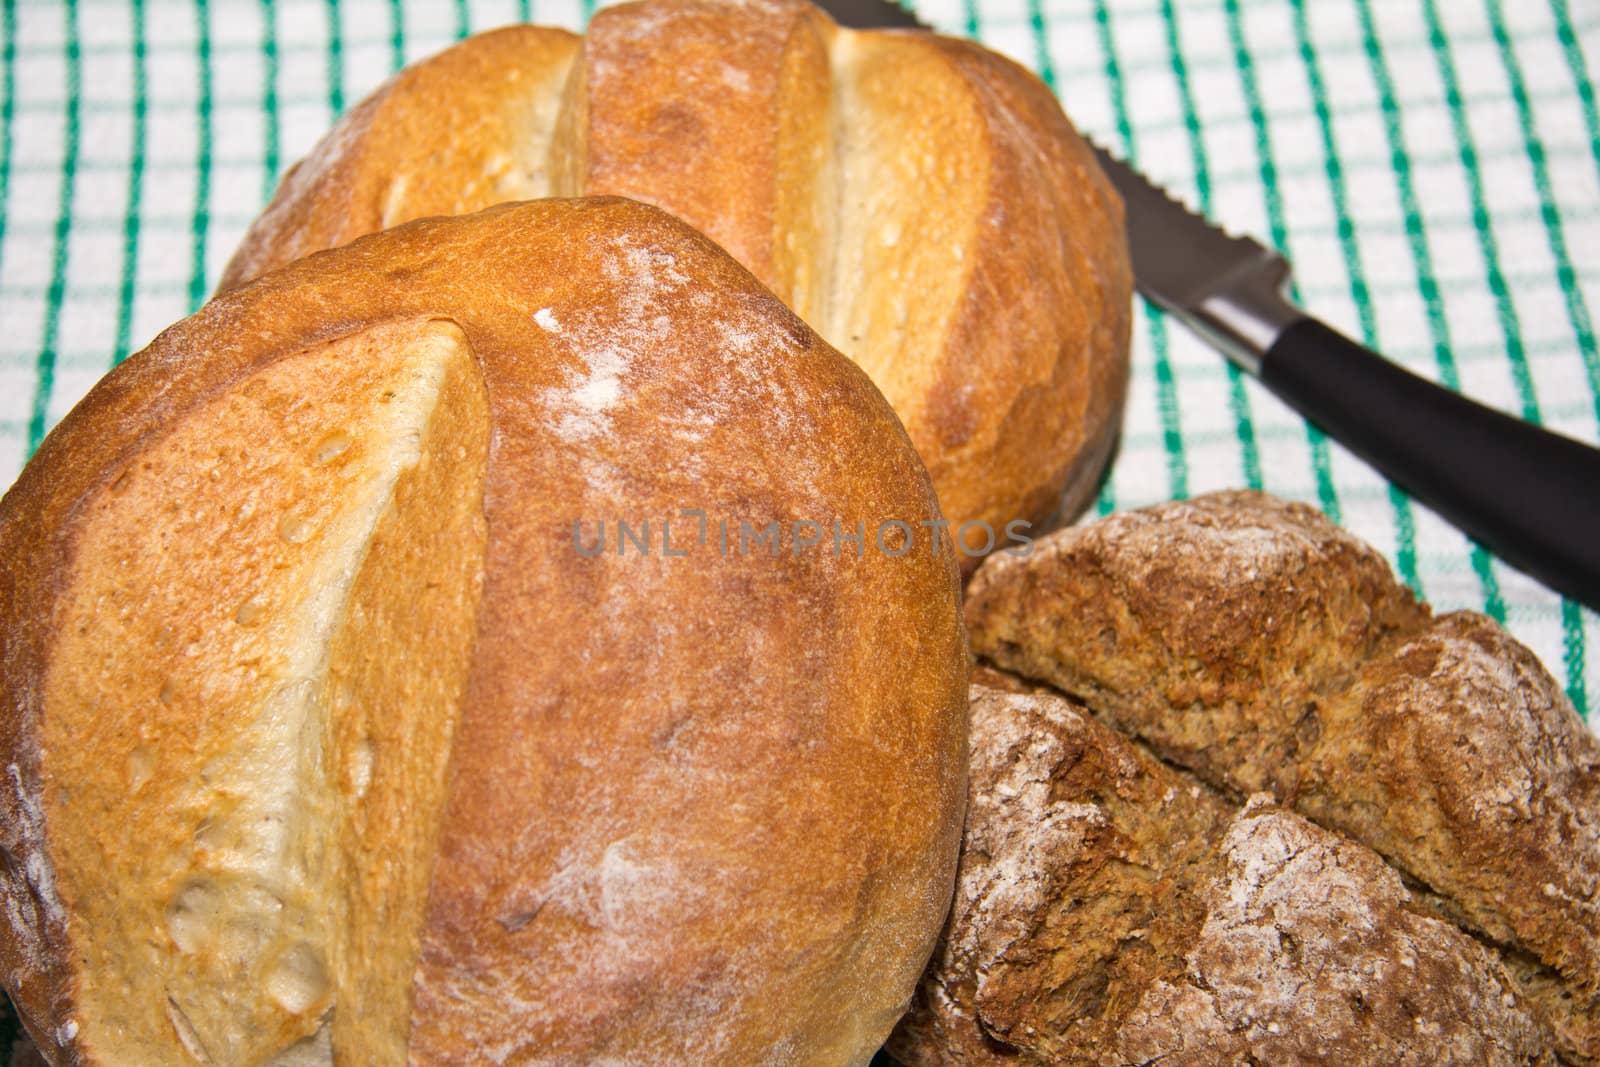 Three loaves of freshly baked bread